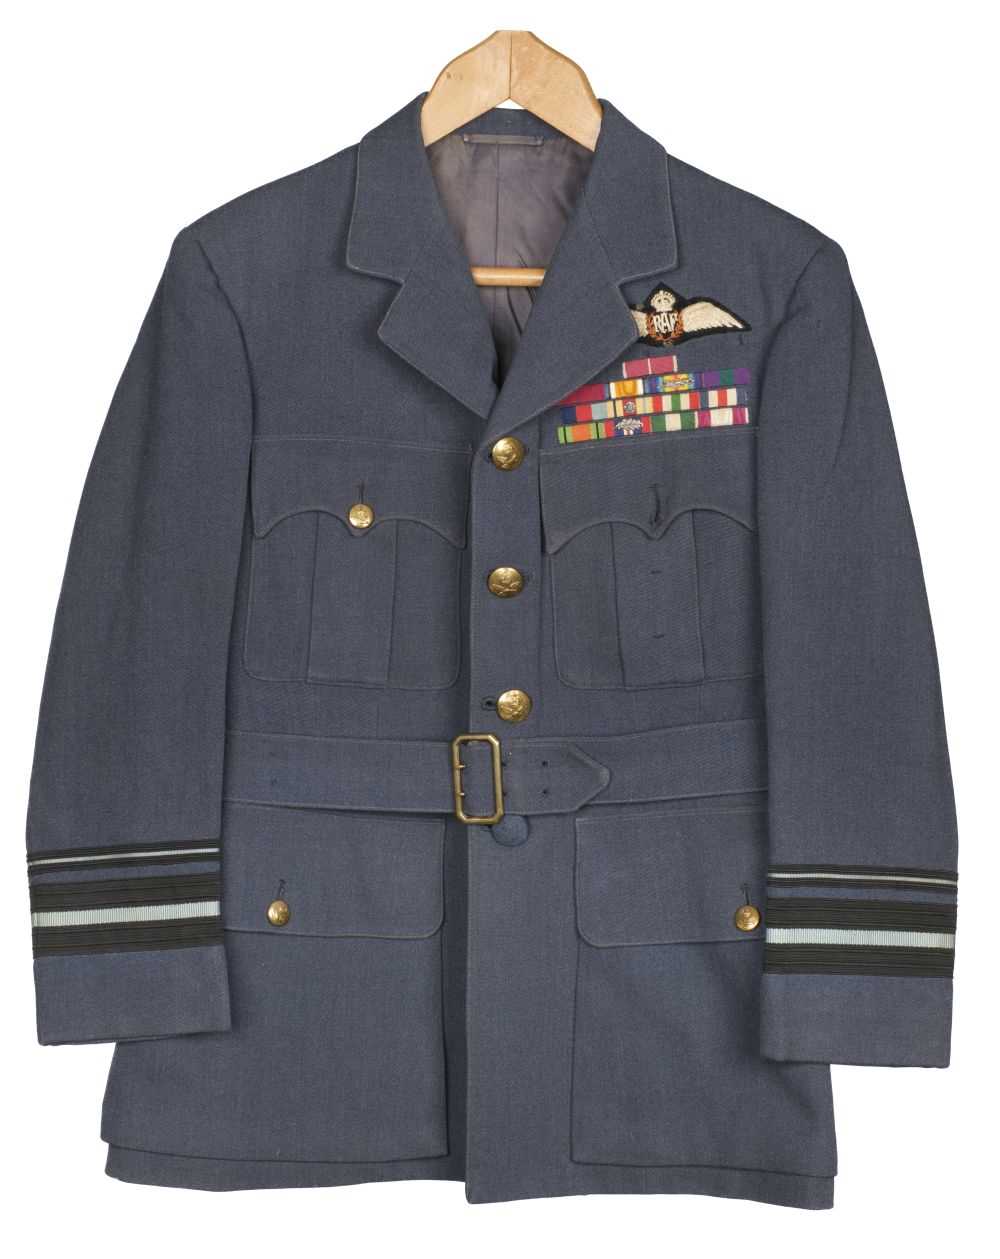 Lot 208 - Air Vice Marshal Sir Alexander Davidson. A WWII period RAF officers uniform